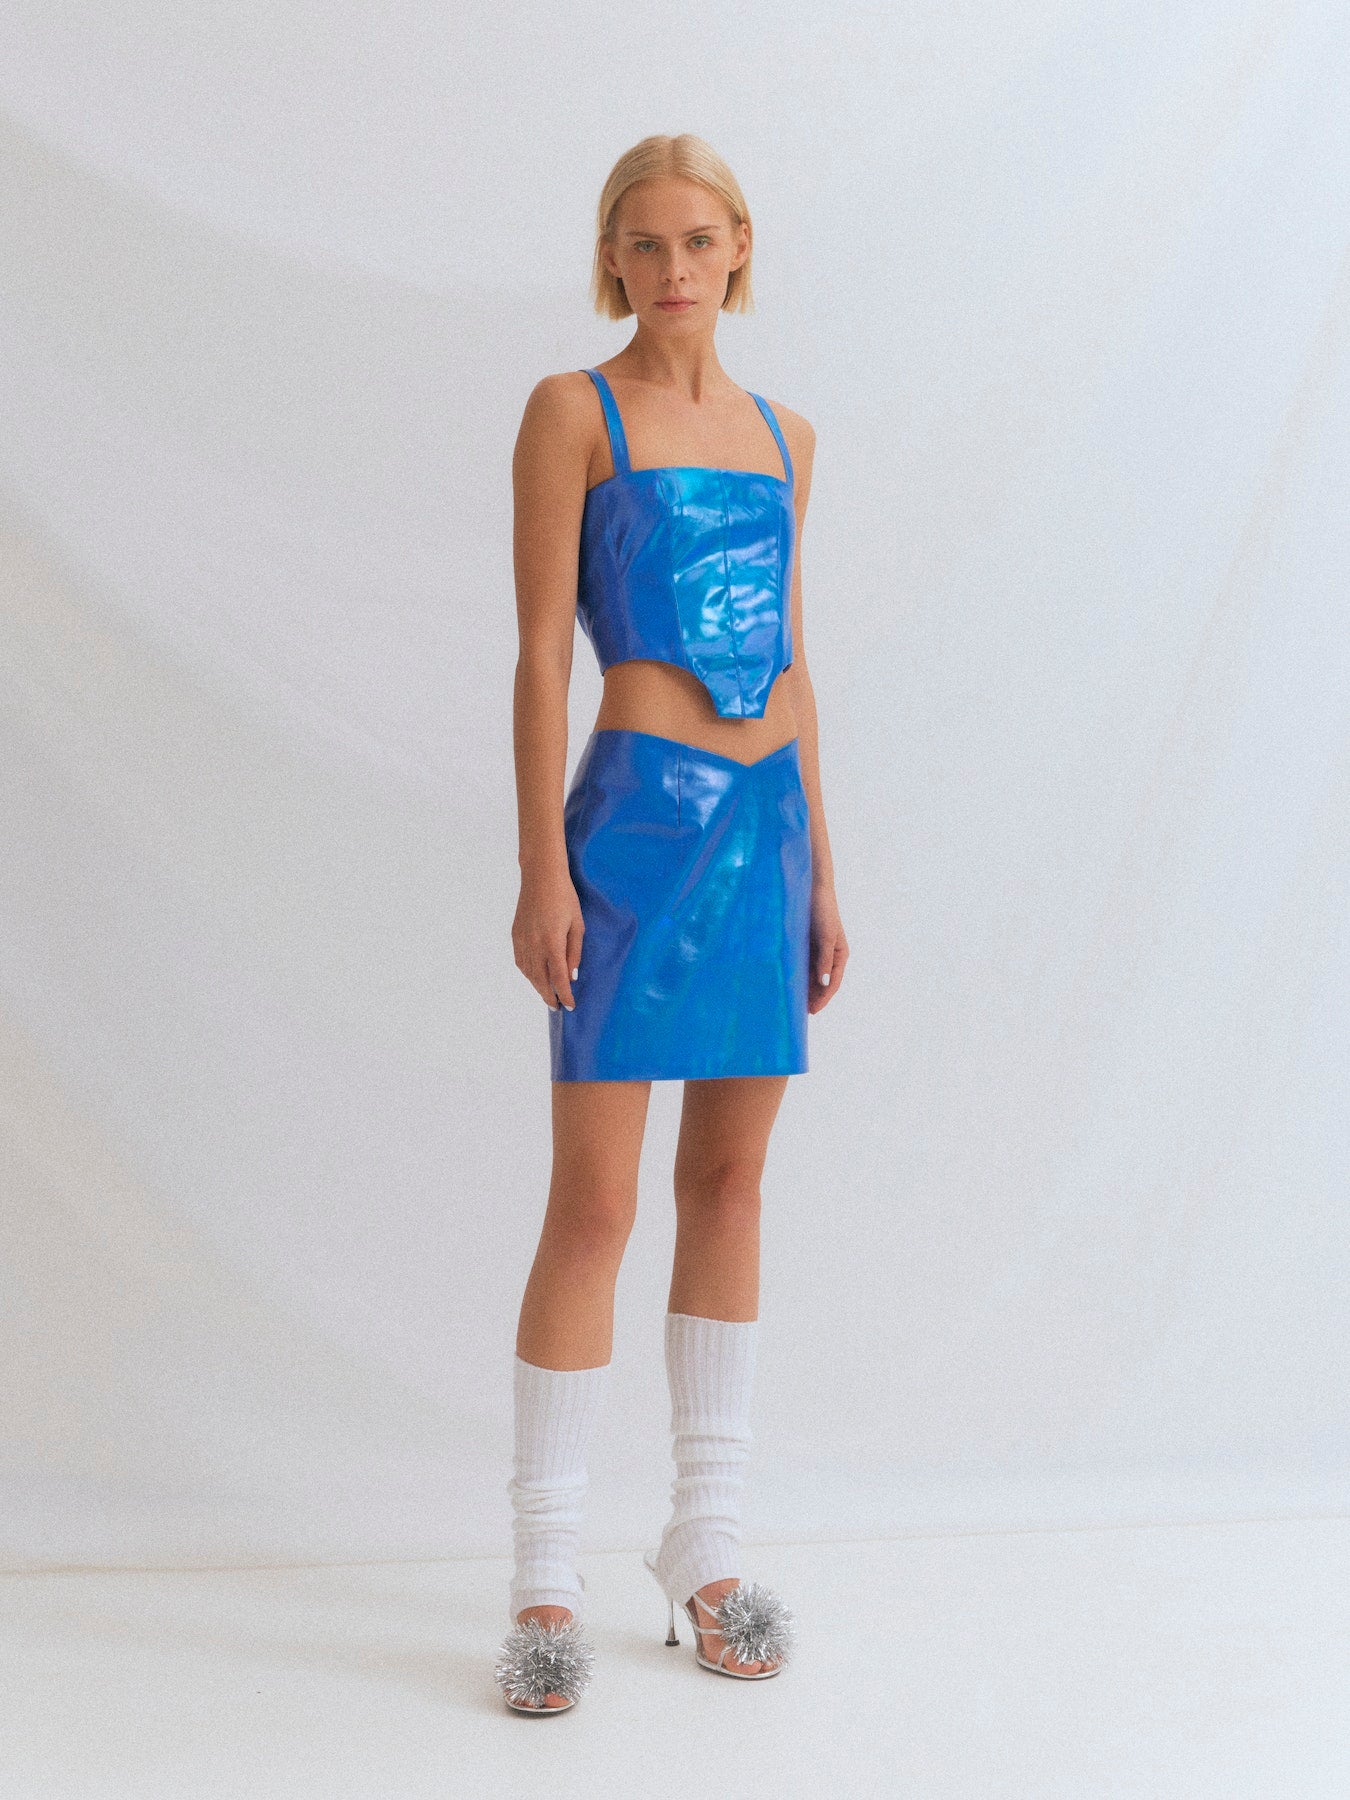 Something New - Metallic Blue Holographic Mini Skirt